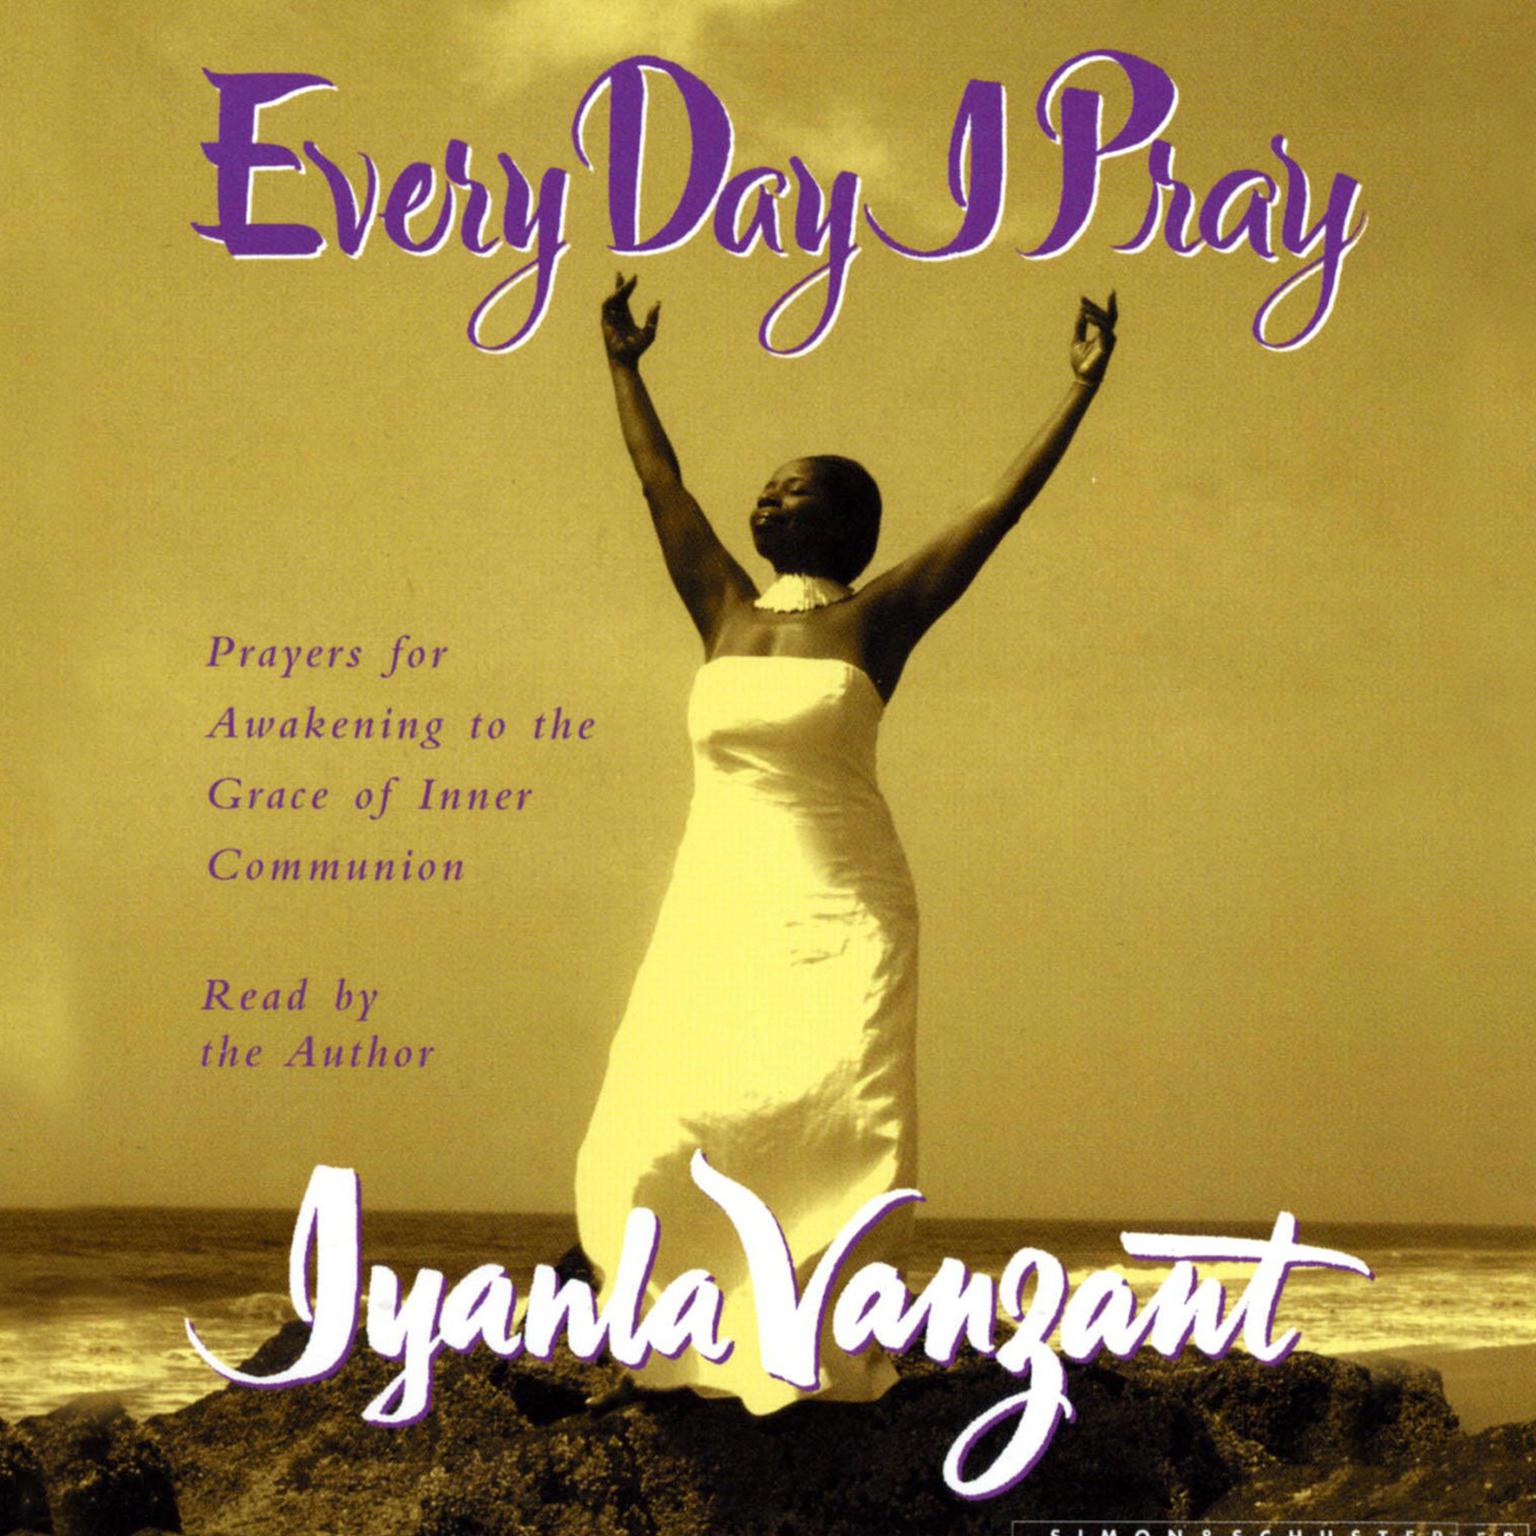 Every Day I Pray (Abridged): Prayers for Awakening to the Grace of Inner Communion Audiobook, by Iyanla Vanzant